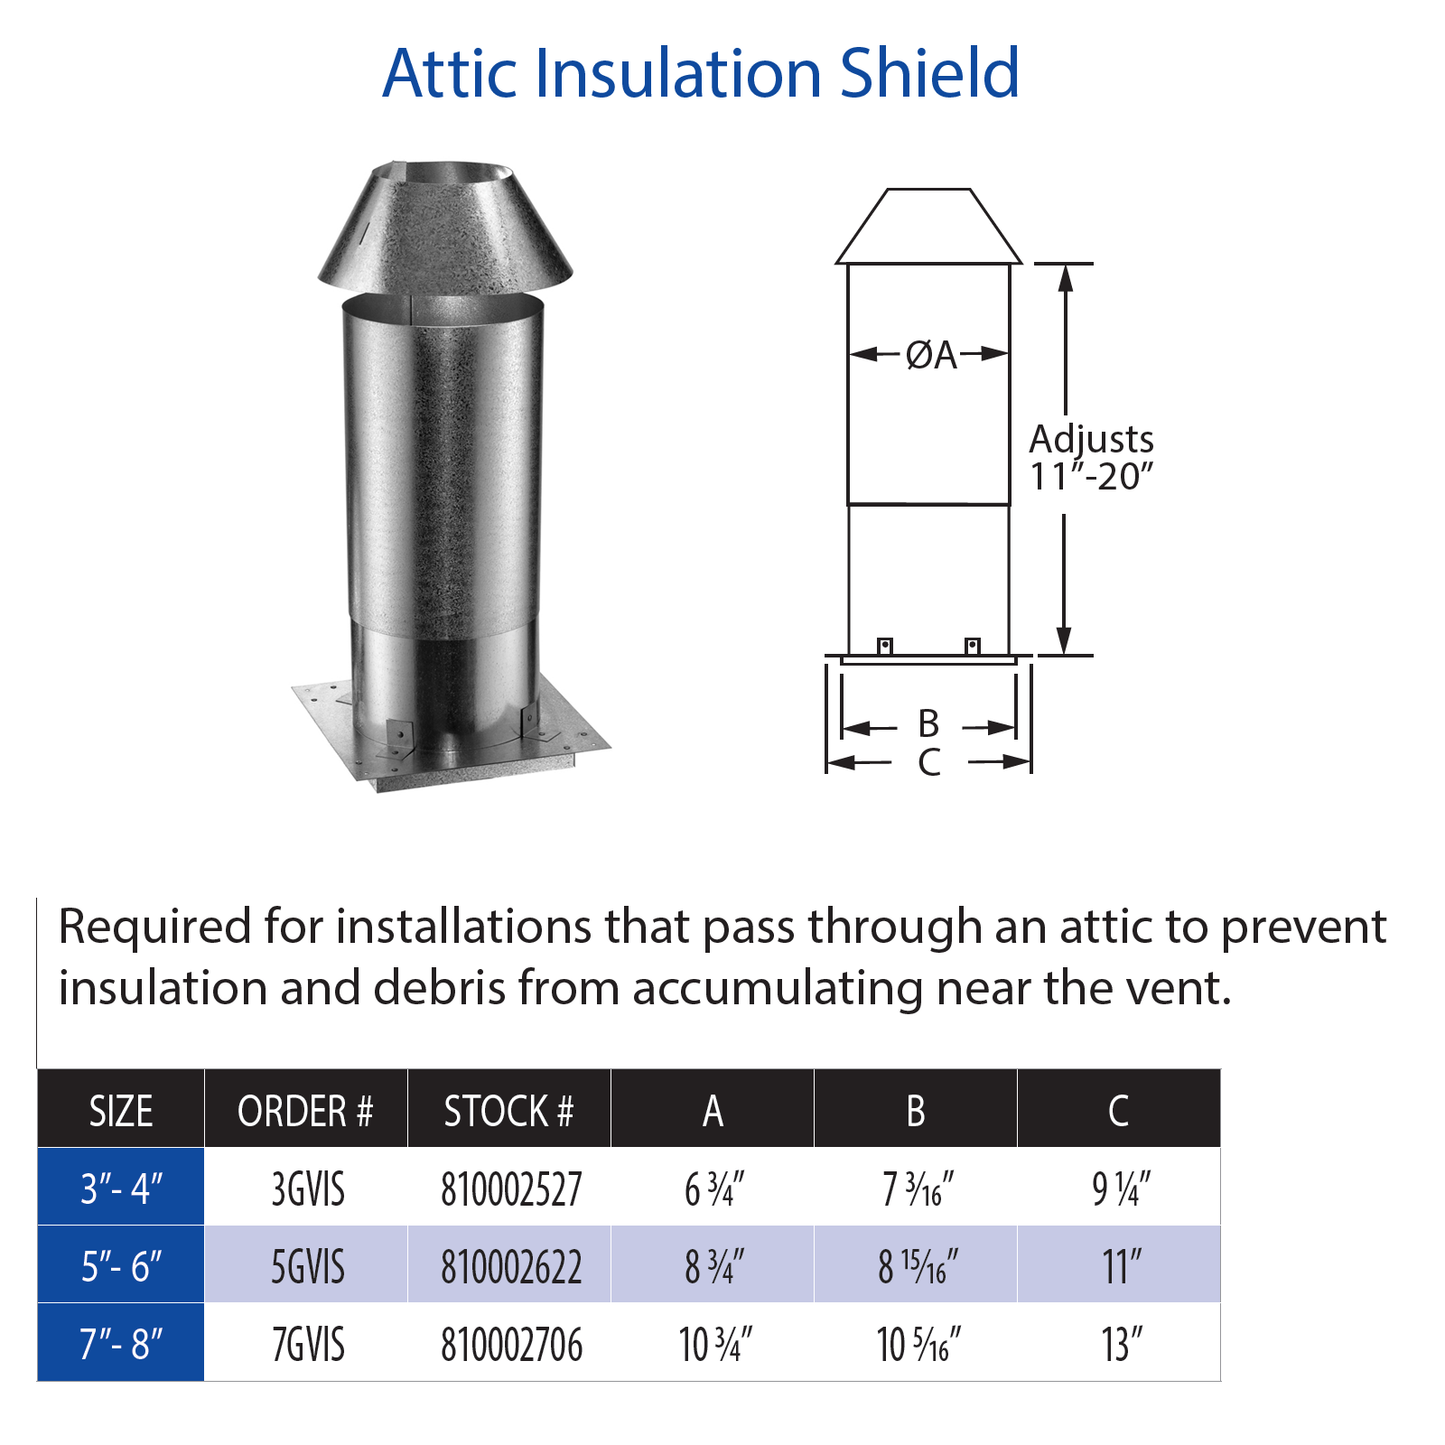 DuraVent Type B Attic Insulation Shield 7" - 8" | 7GVIS